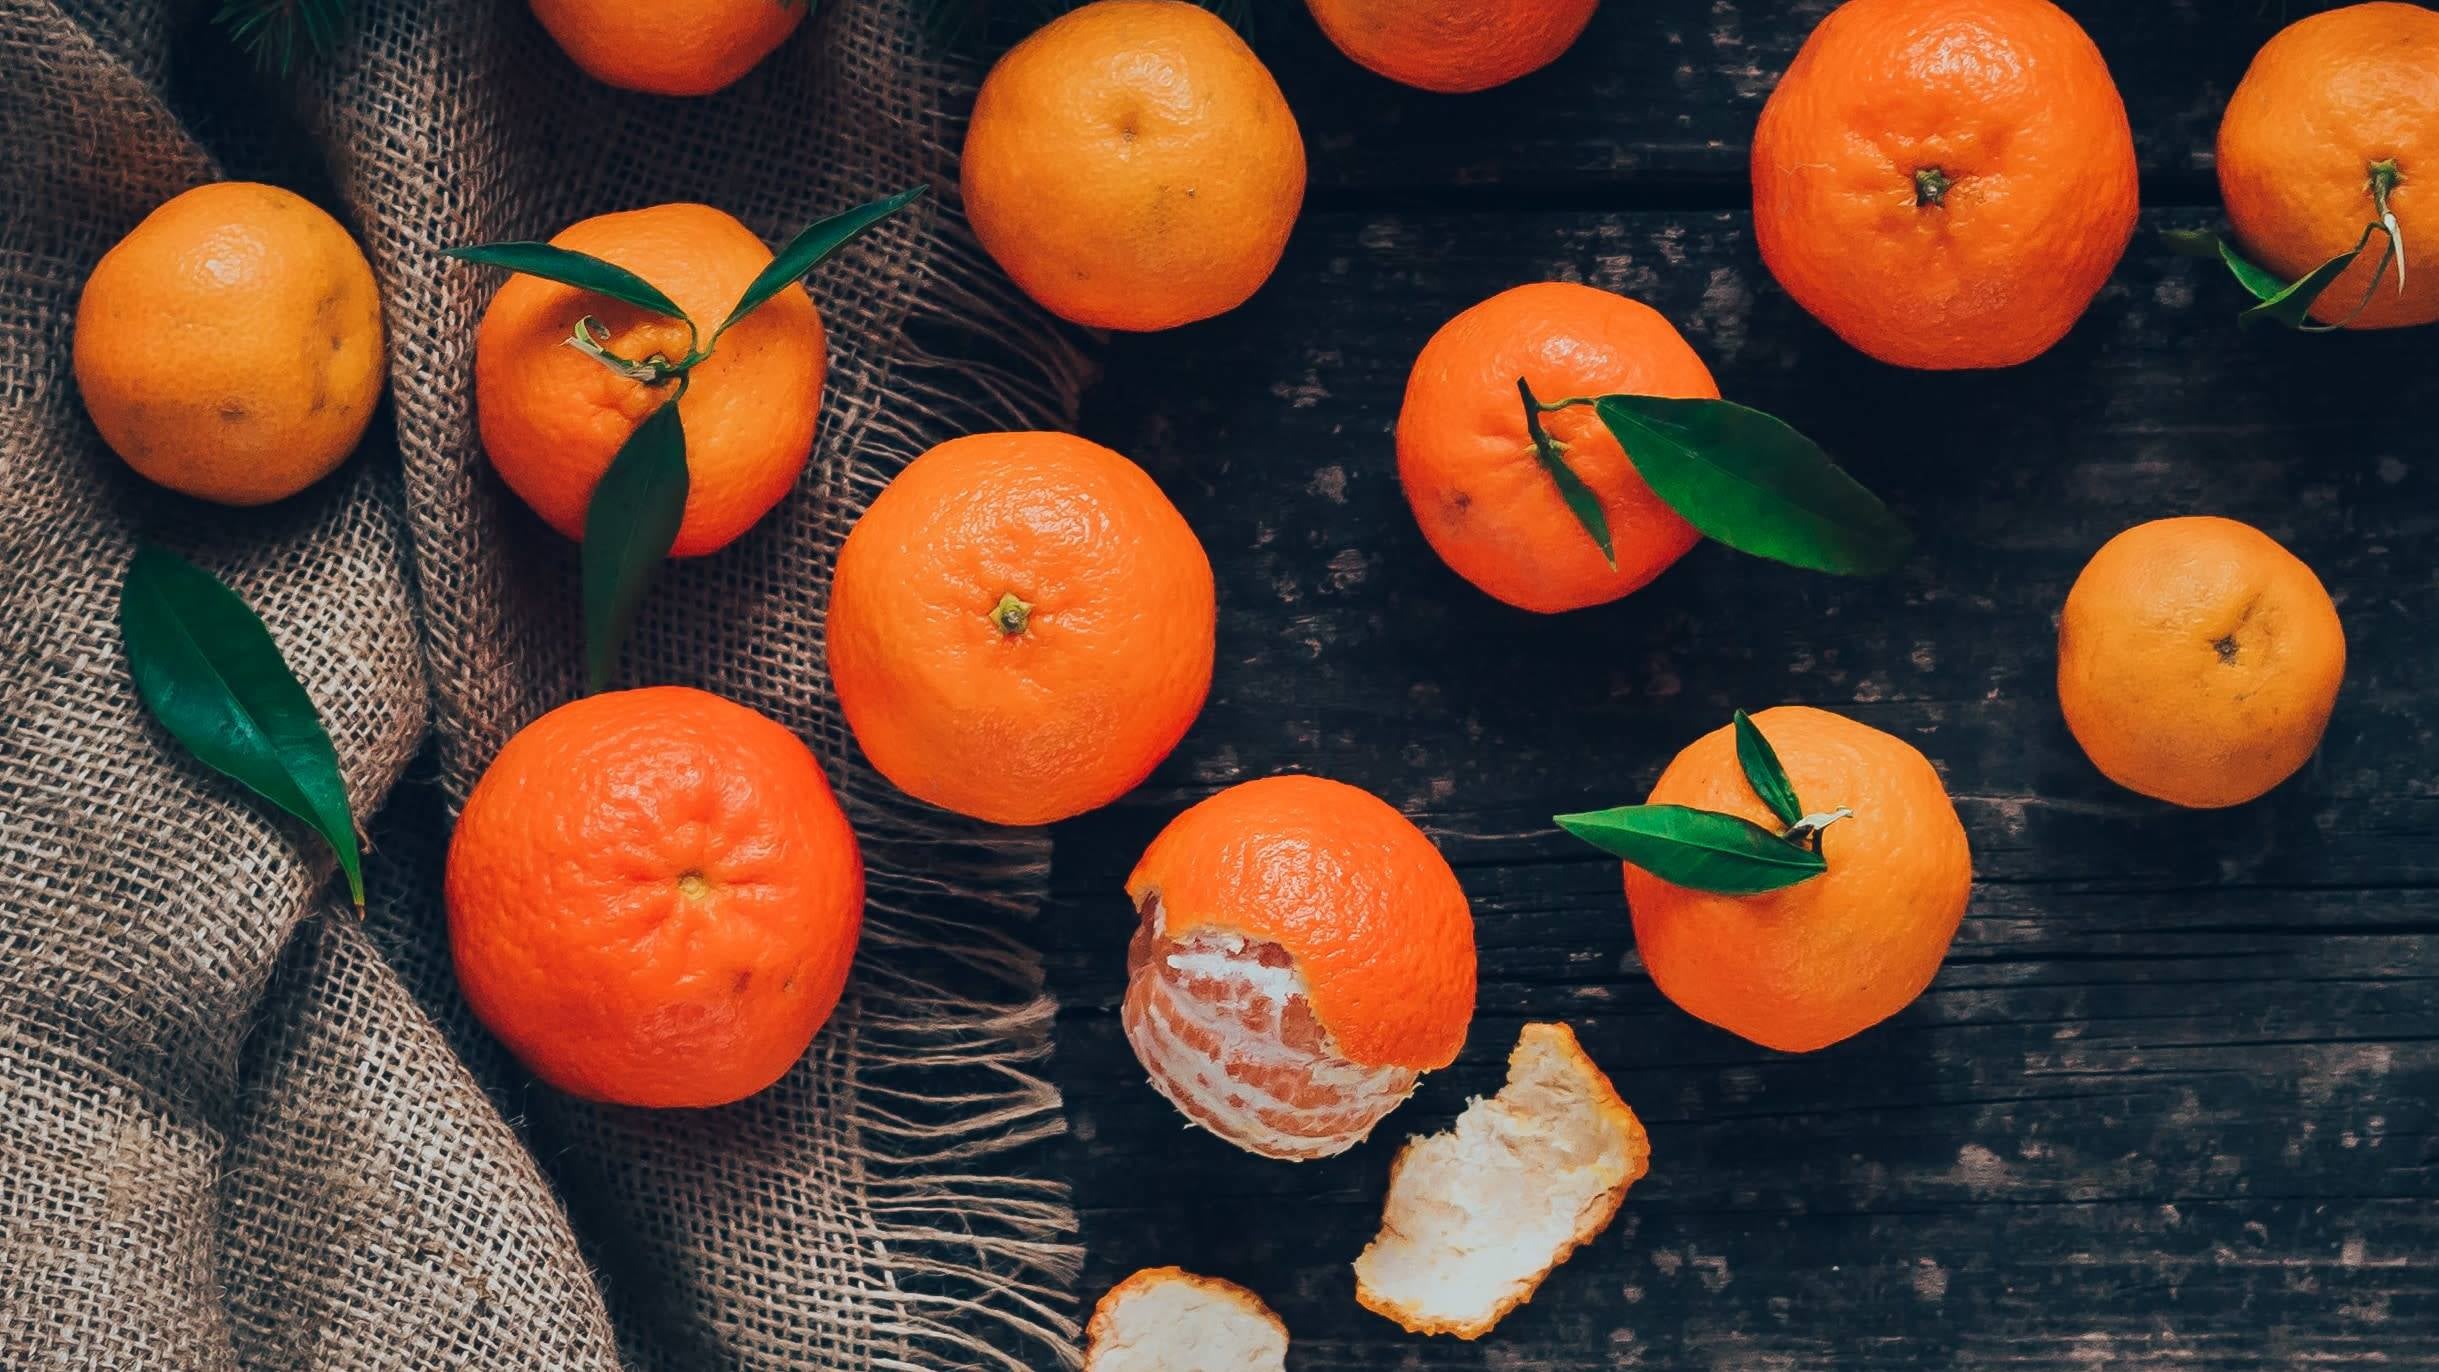 The Best Plane Snack Is A Mandarin Orange